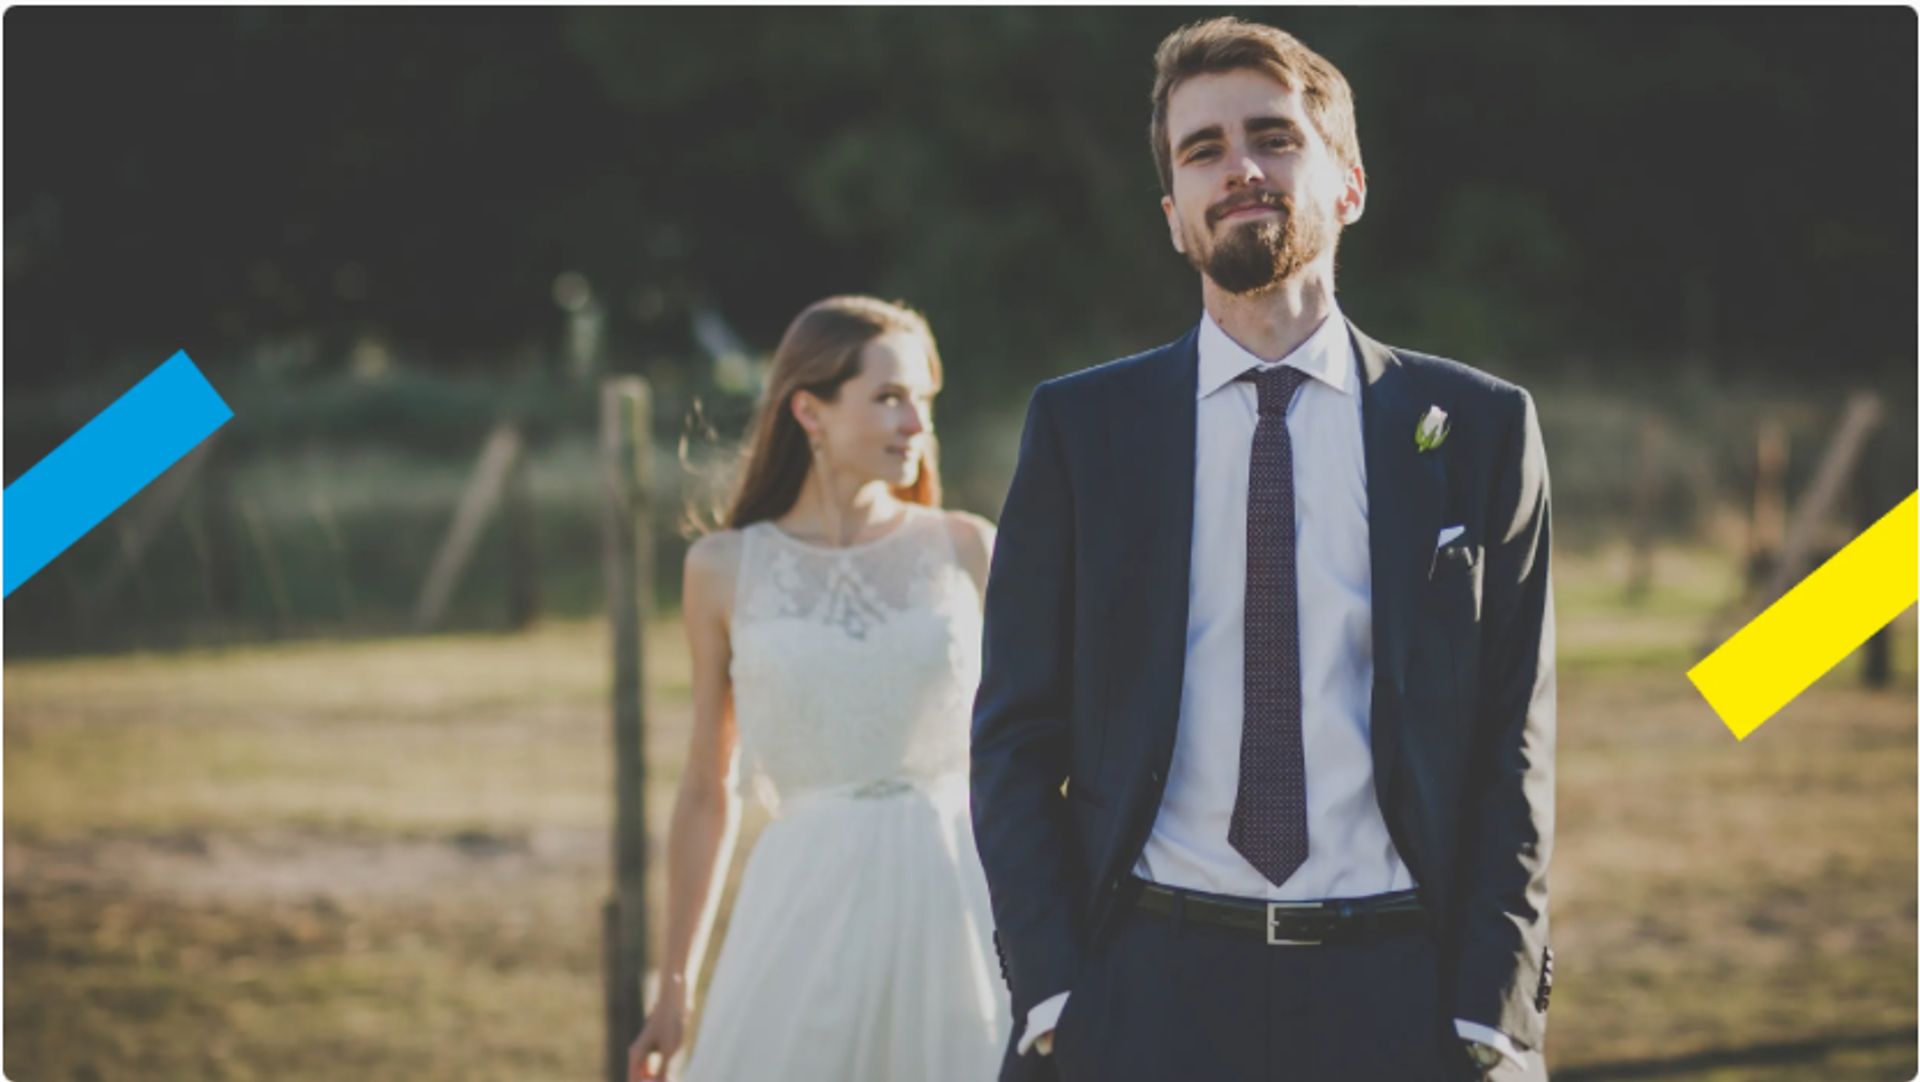 Ex-deelnemer 'Married At First Sight' is woest: “We hadden een deal!”